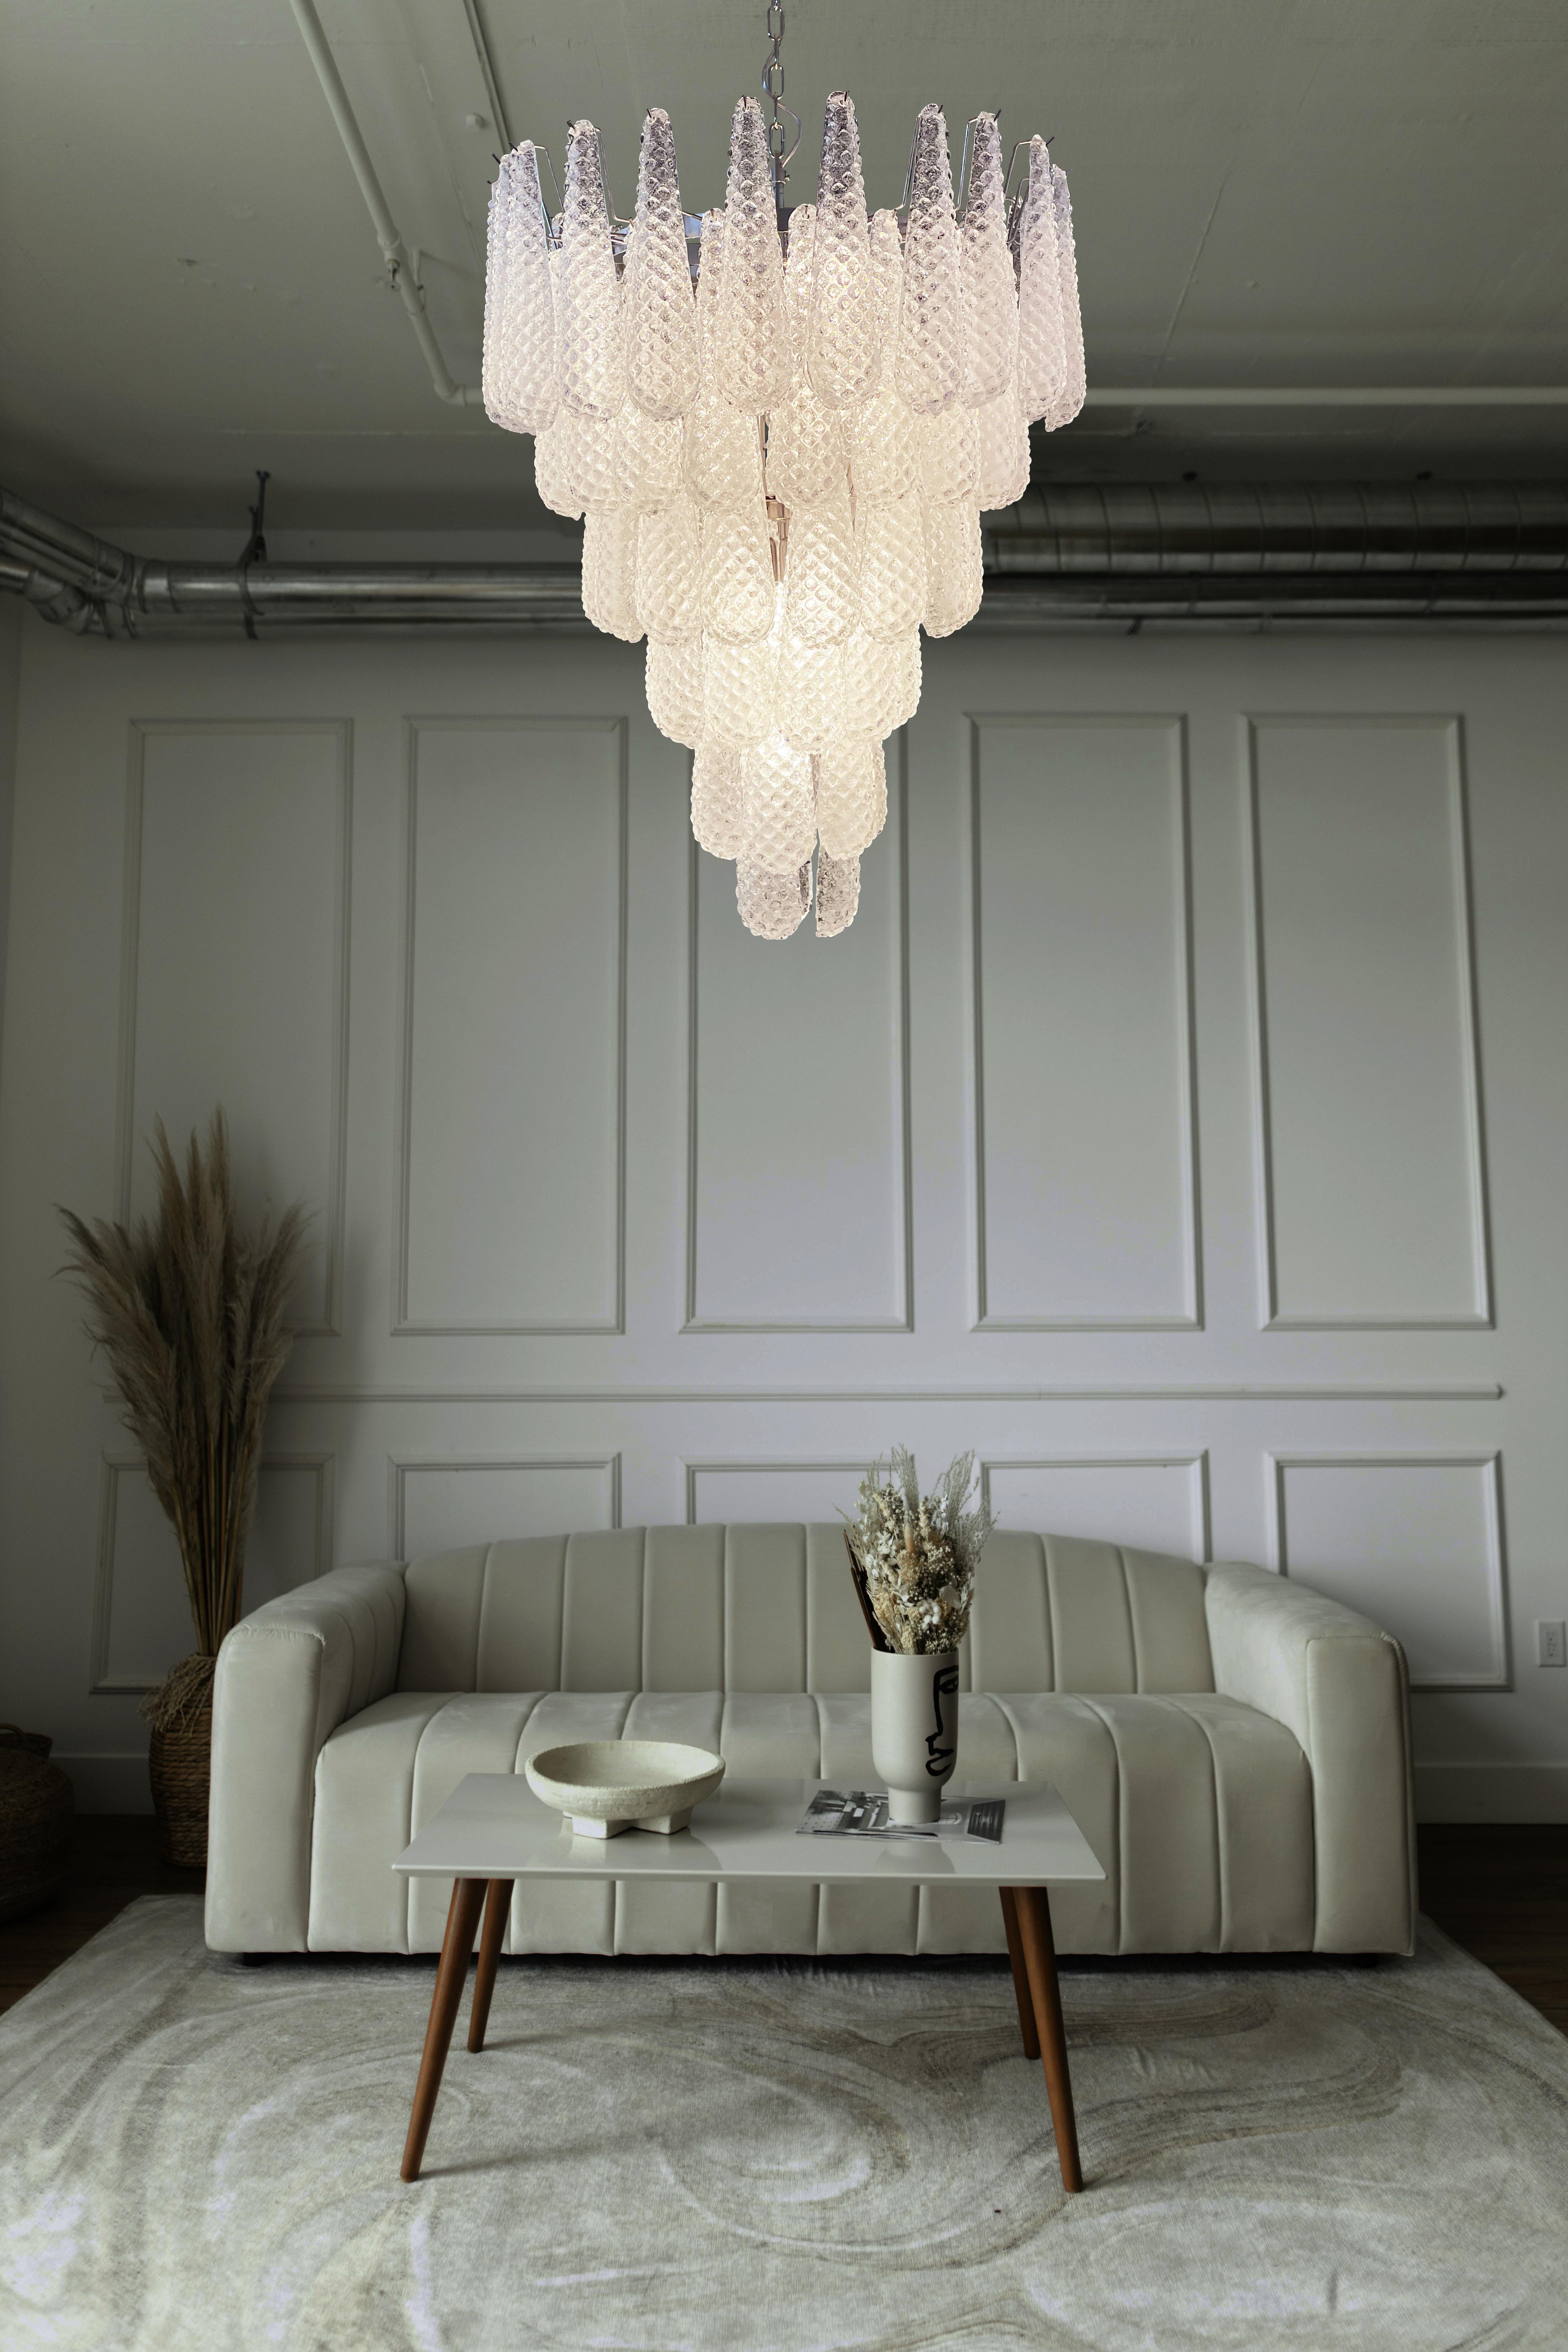 Magnificent Italian vintage Murano glass chandeliers - 75 glass petals drop For Sale 4